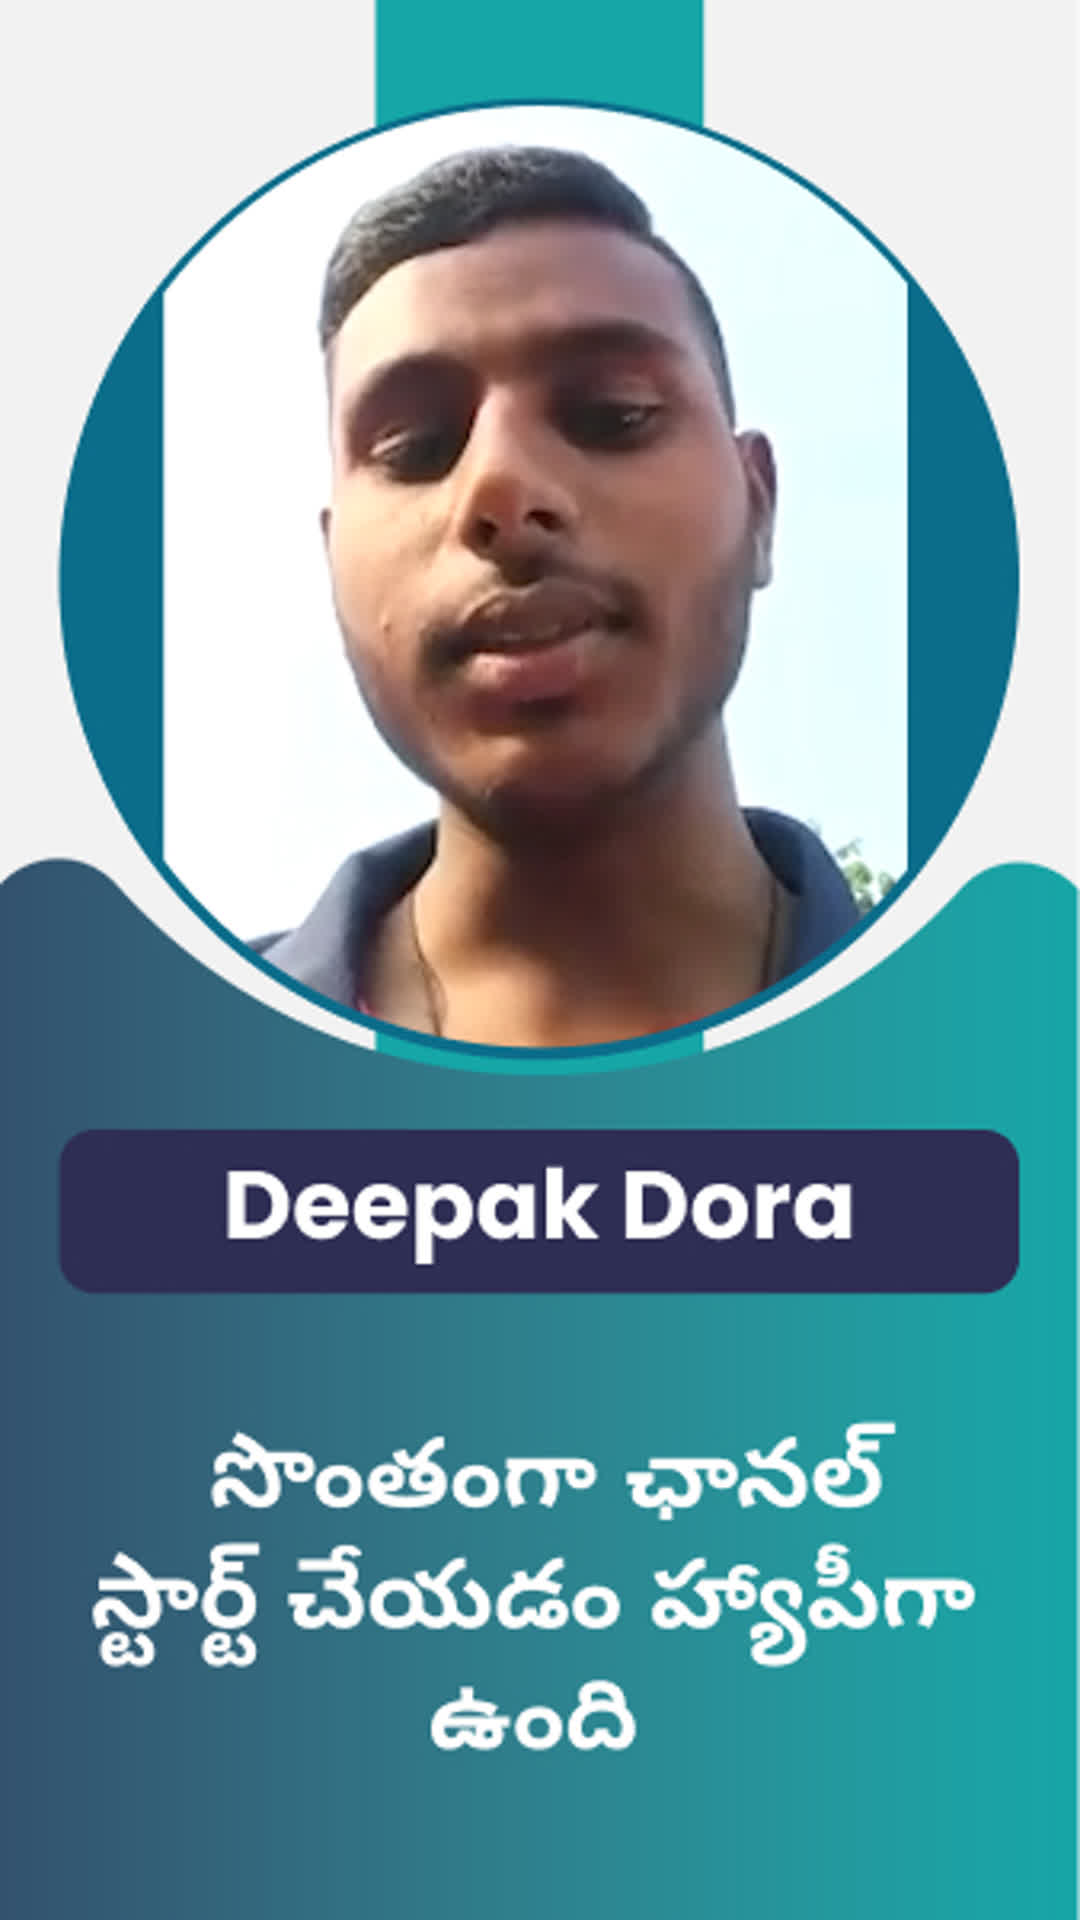 G Deepak Dora's Honest Review of ffreedom app - Ganjam ,Orissa